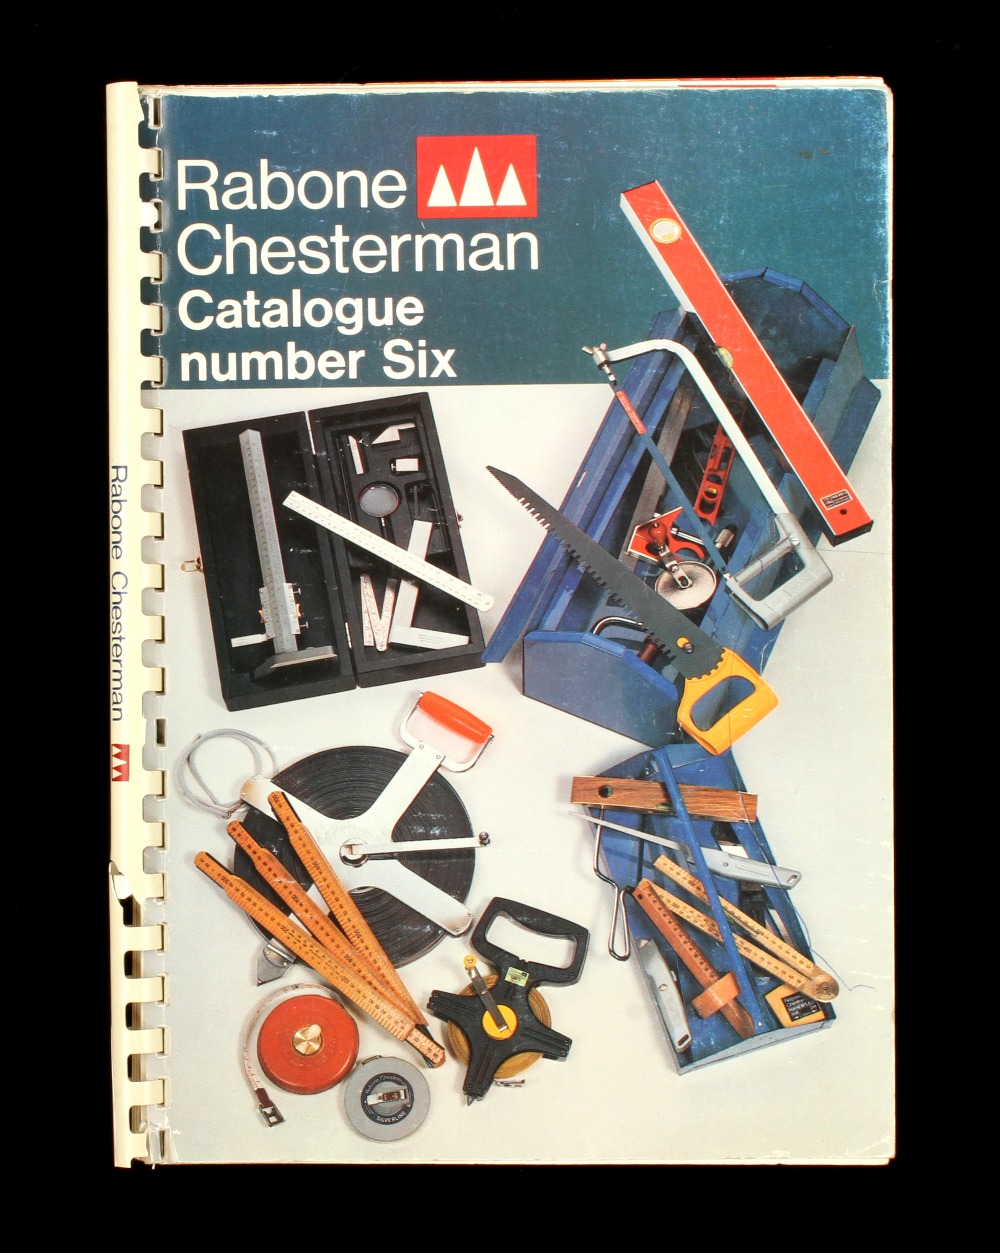 Rabone-Chesterman; 1977 ill cat.